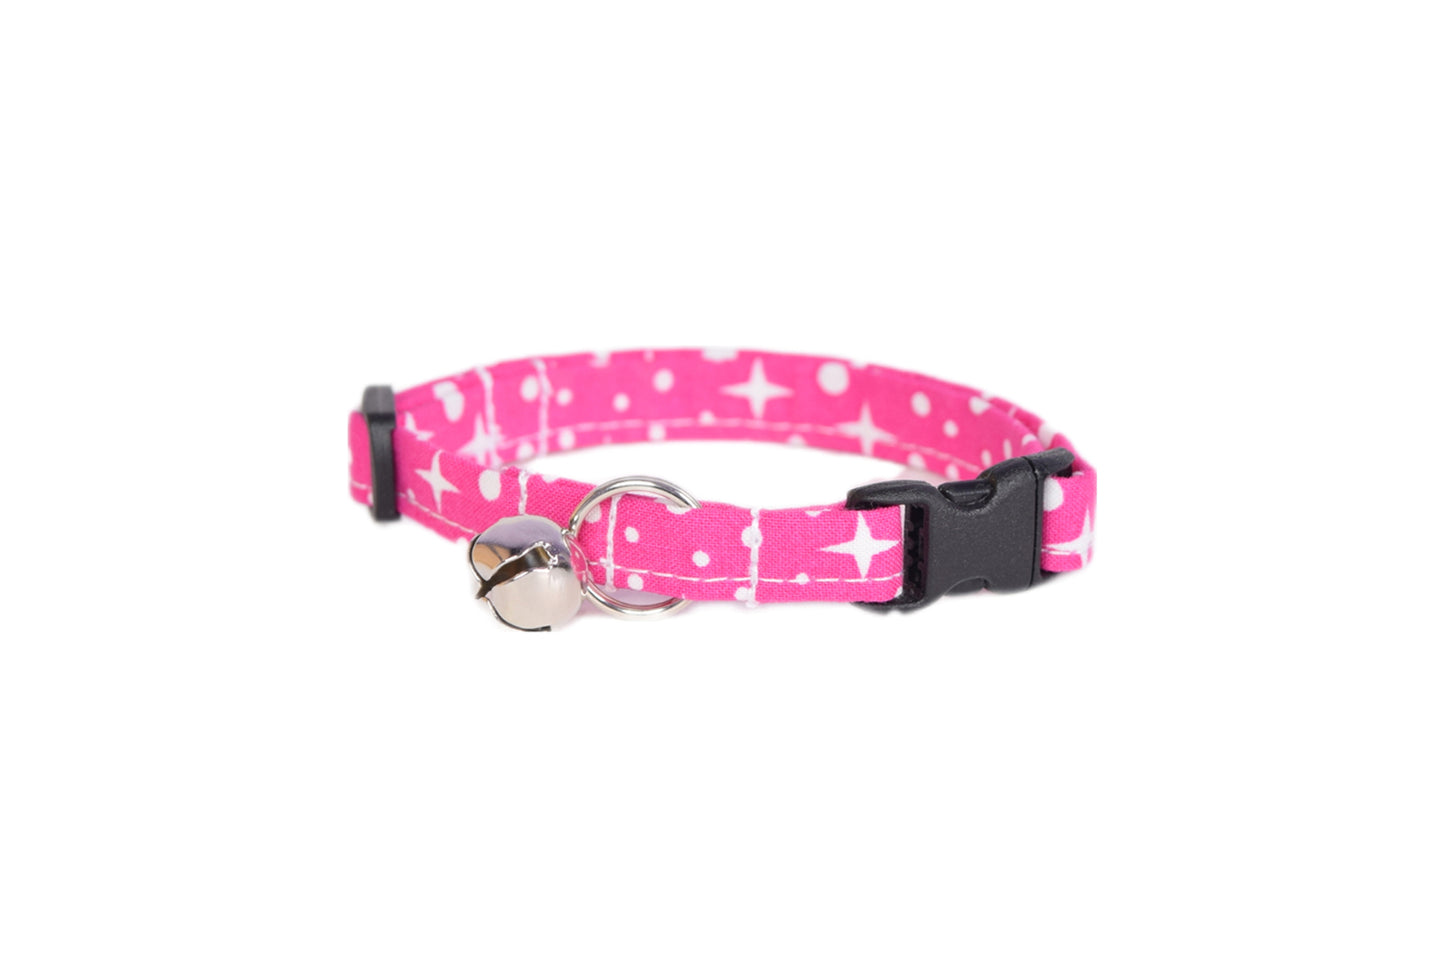 Hot Pink Stars & Dots Breakaway Cat Collar - Mid Century Modern Pink Cat Collar - Handmade by Kira's Pet Shop